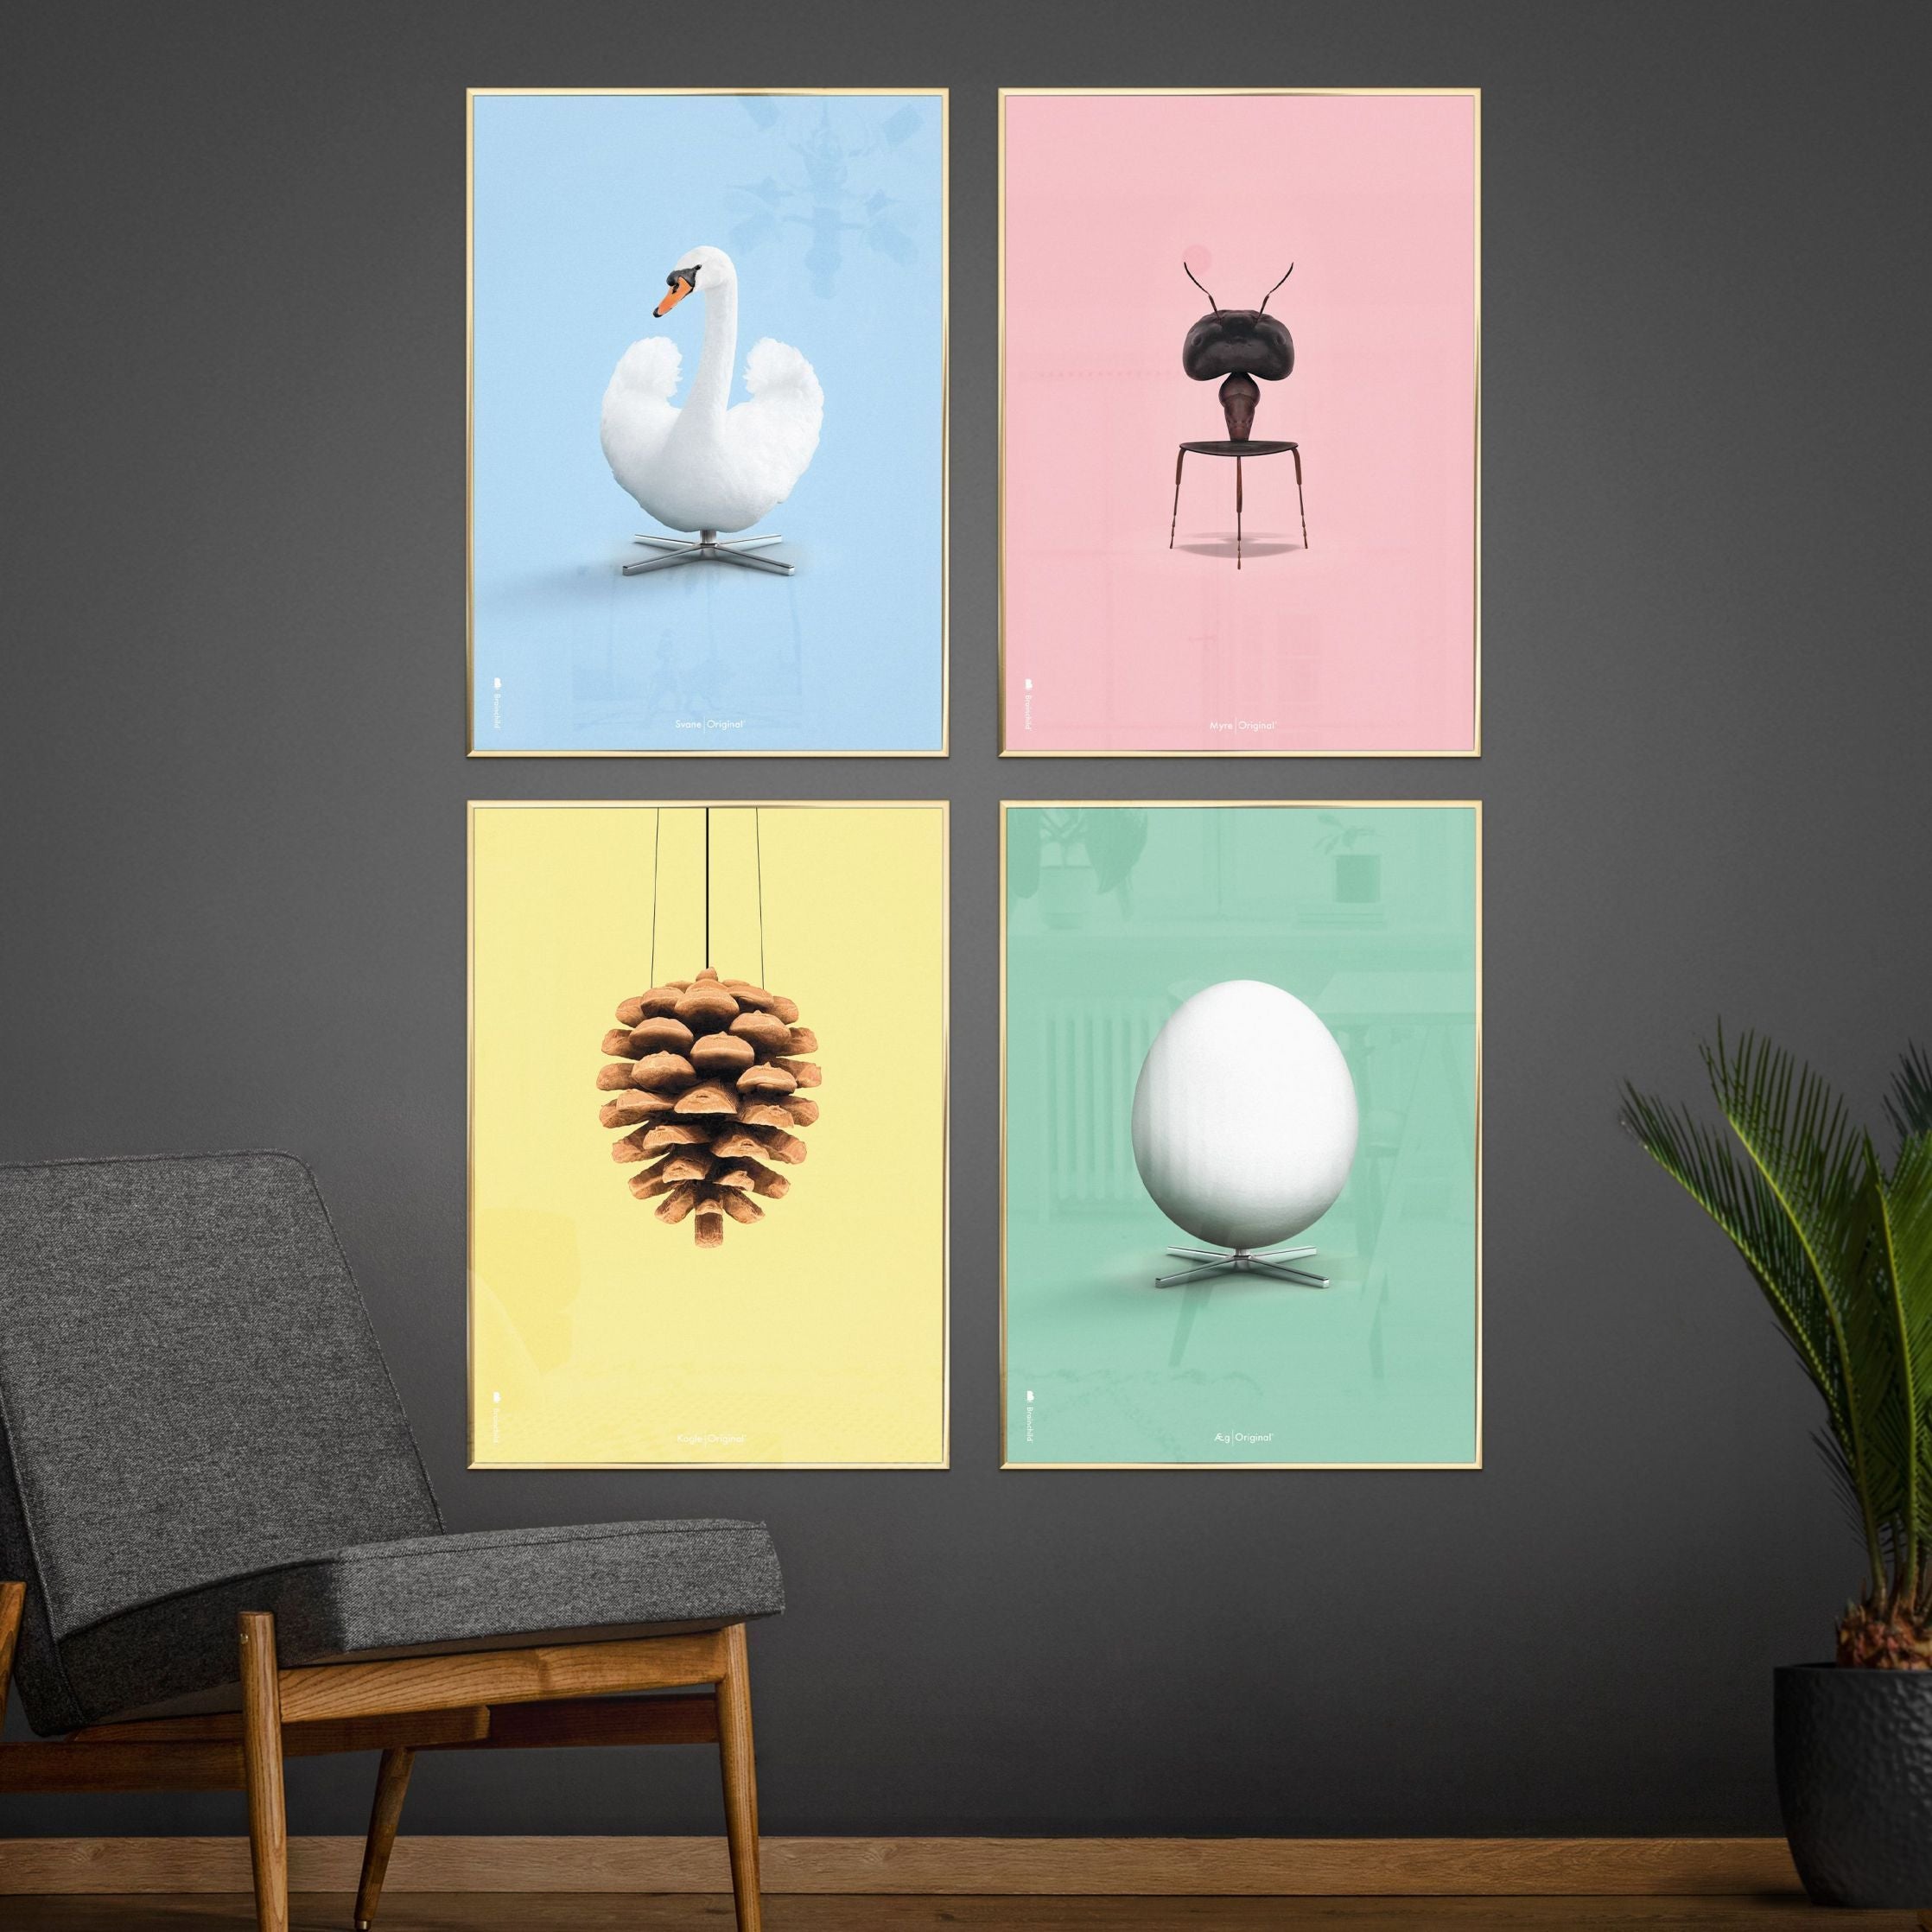 Brainchild Pine Cone Classic Poster, Dark Wood Frame A5, Yellow Background